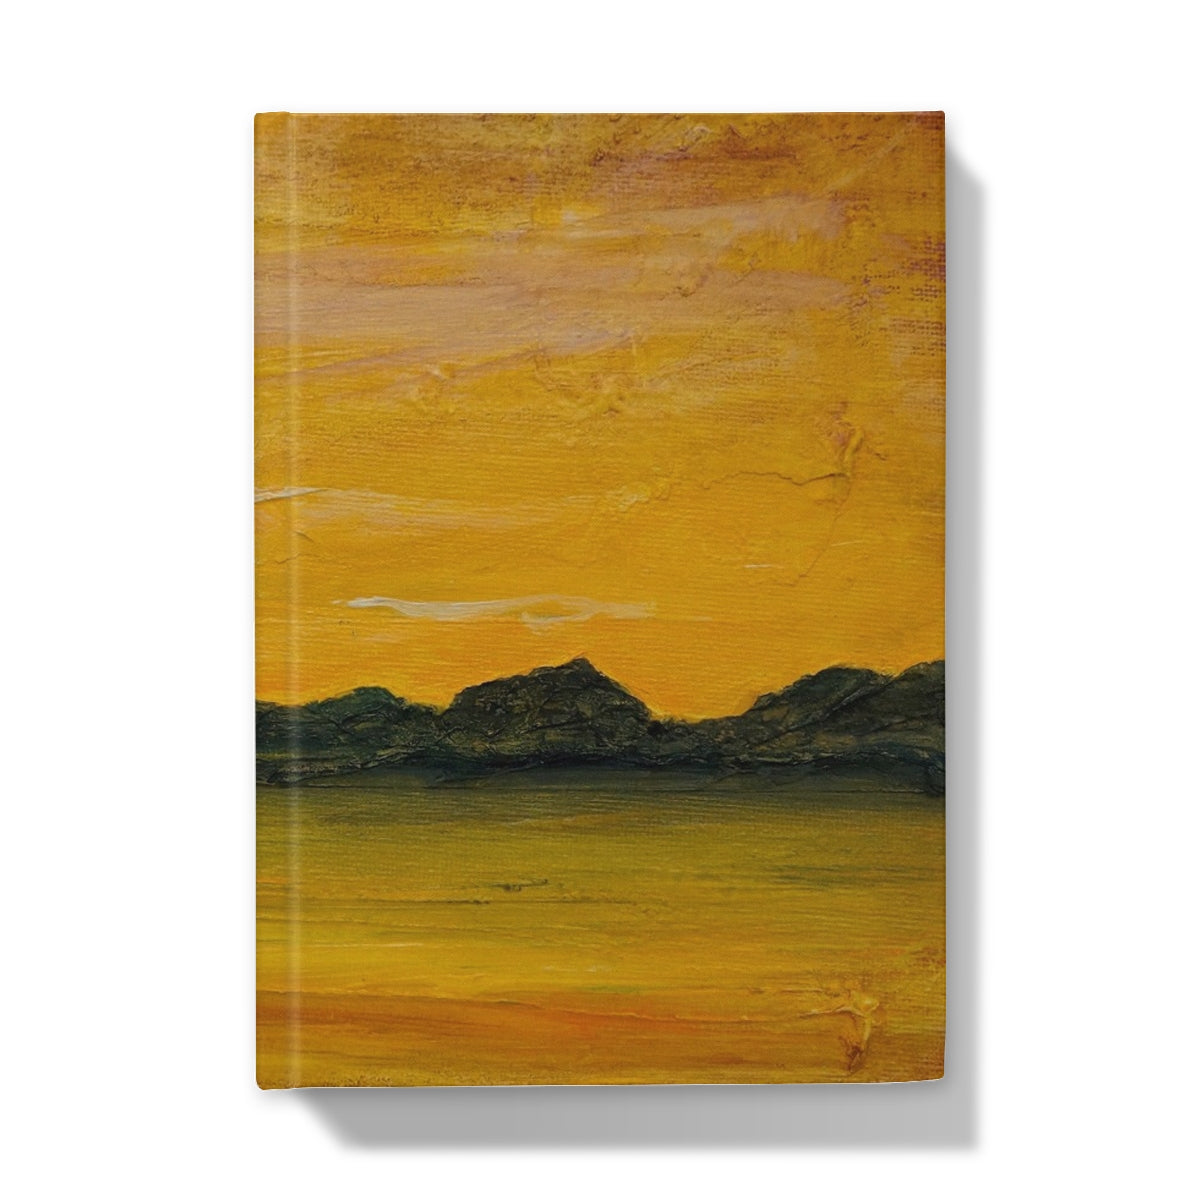 Jura Sunset Art Gifts Hardback Journal-Journals & Notebooks-Hebridean Islands Art Gallery-A4-Plain-Paintings, Prints, Homeware, Art Gifts From Scotland By Scottish Artist Kevin Hunter